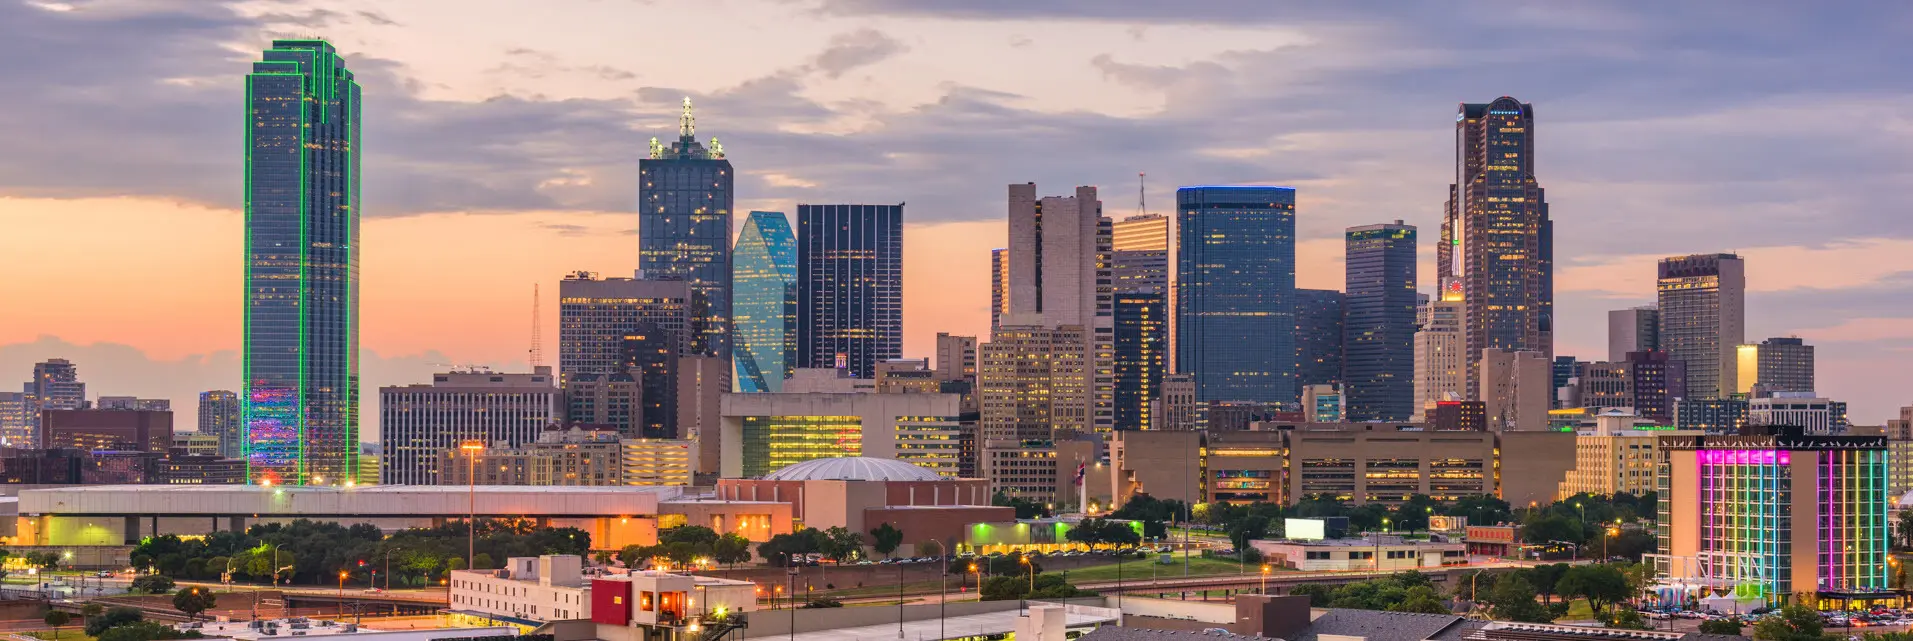 City Center Dallas, TX Real Estate, Homes, Condos For Sale